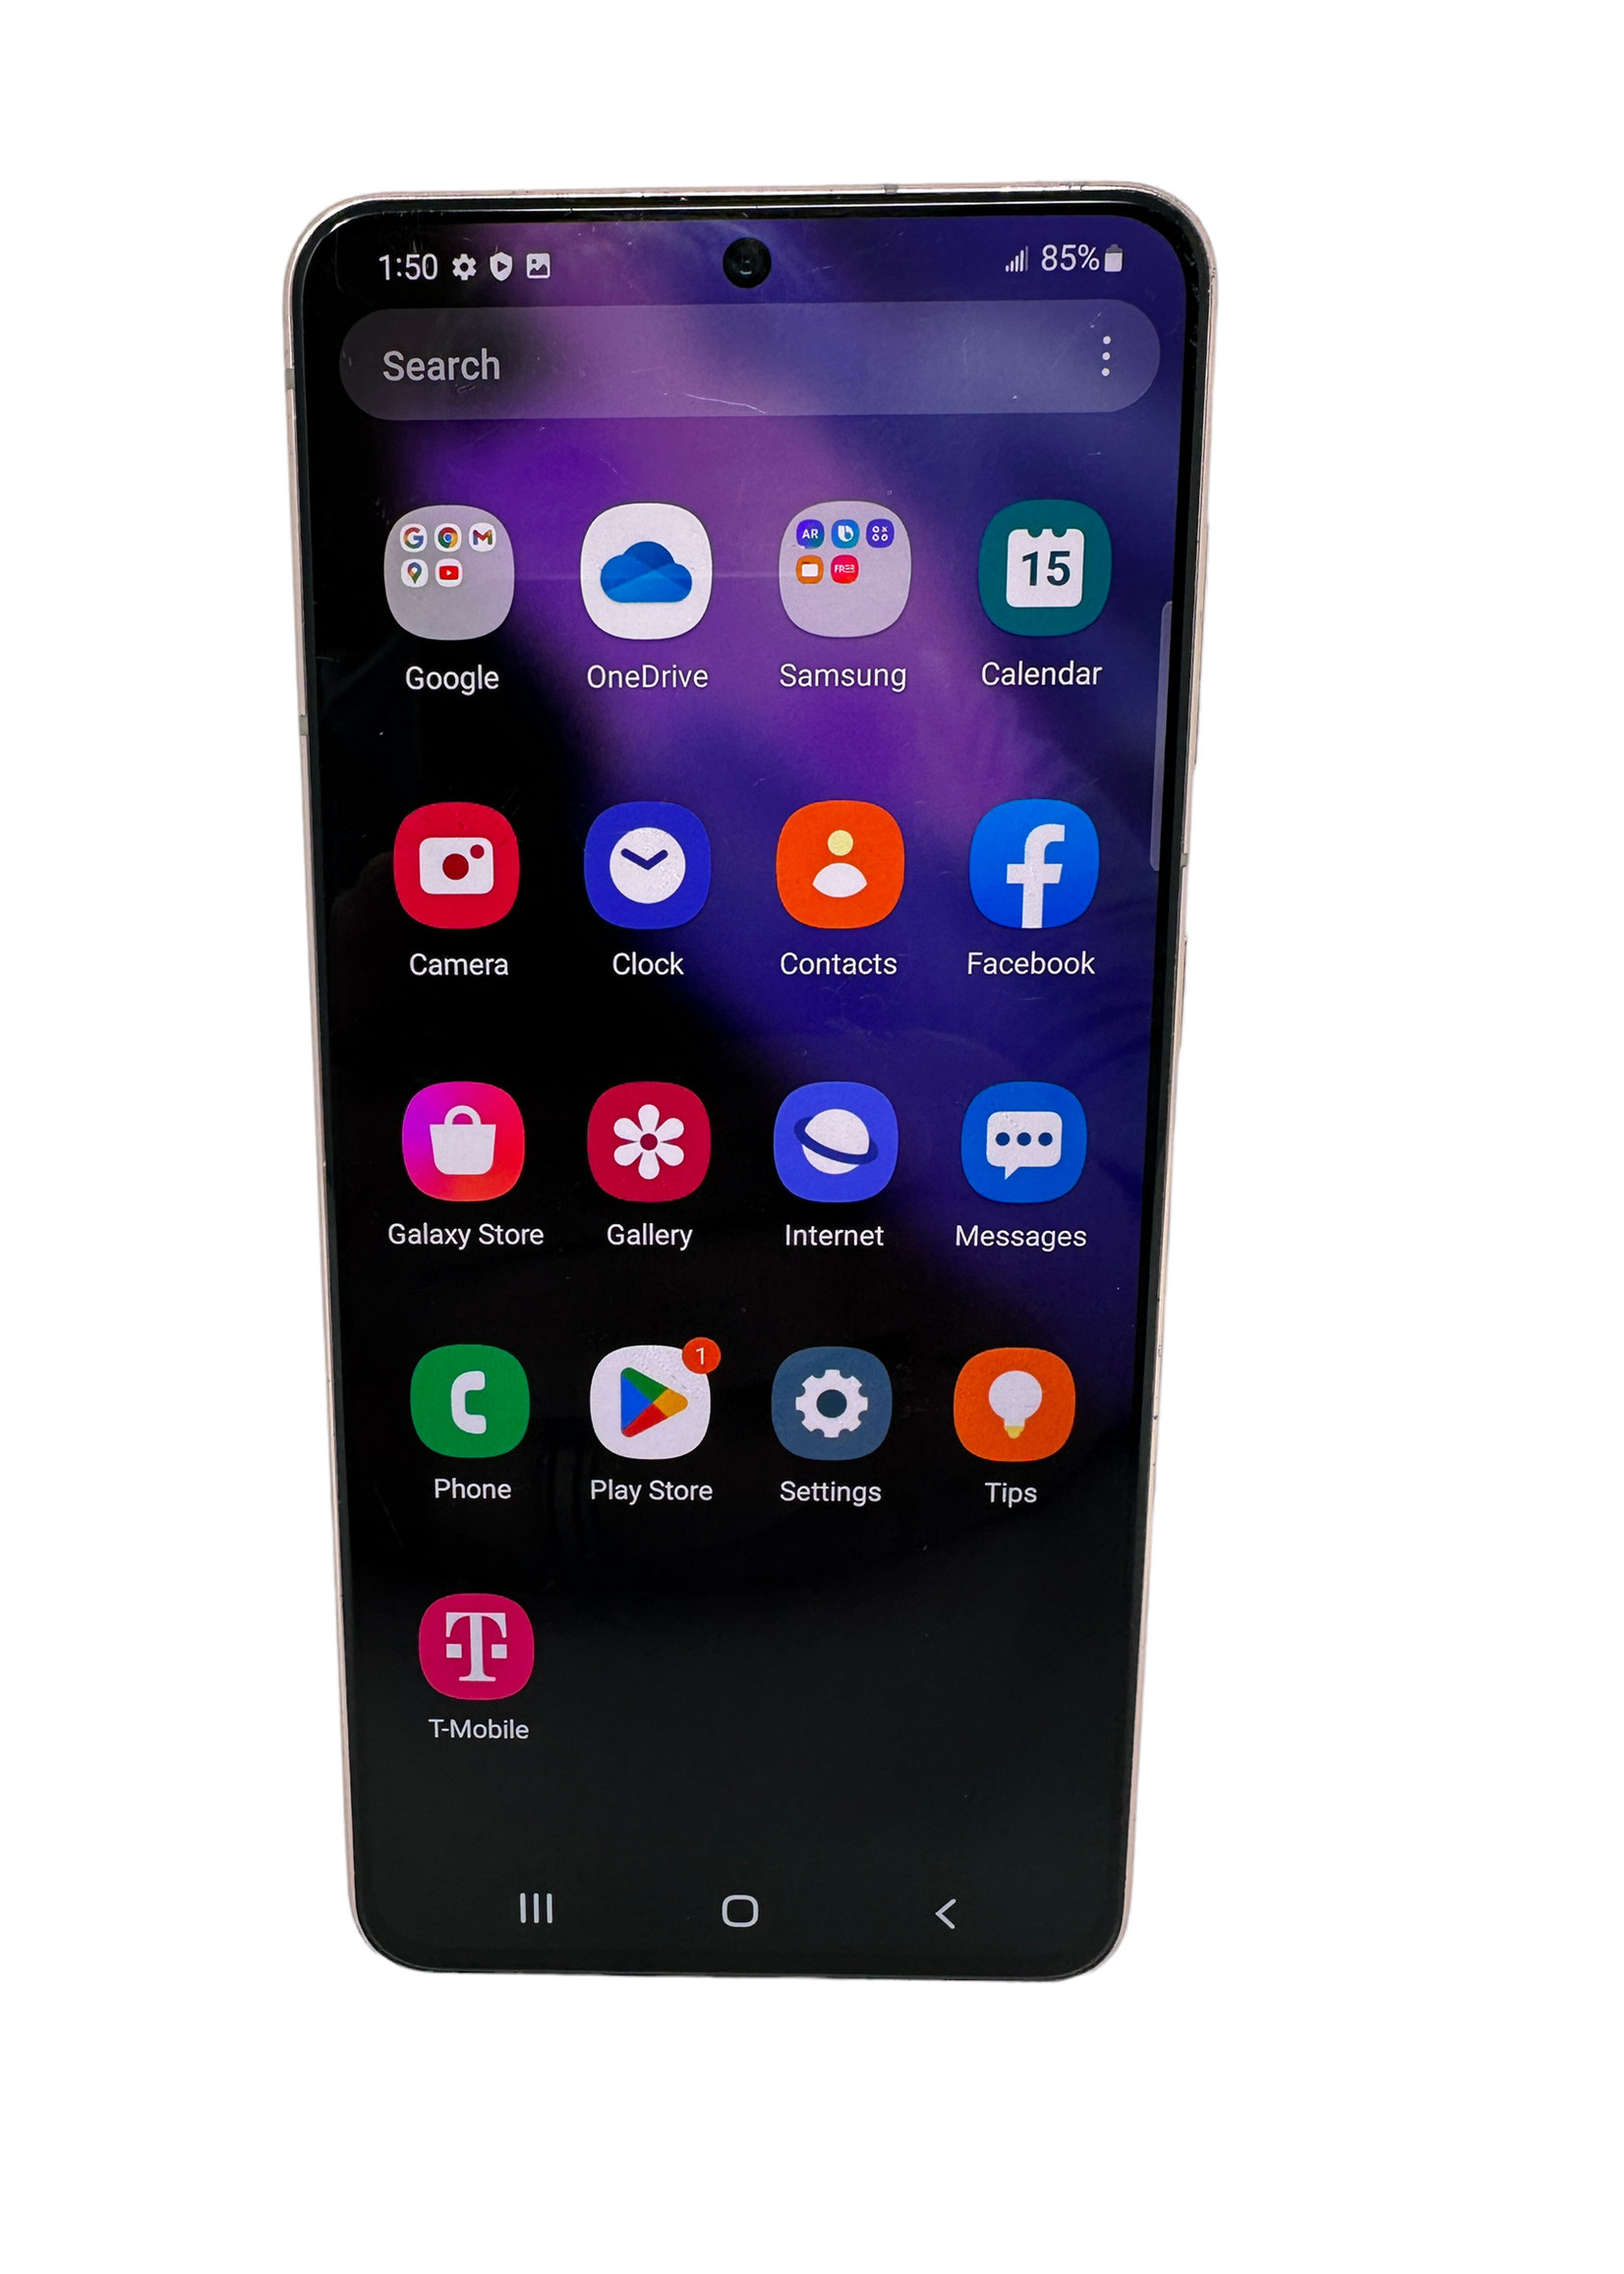 Samsung USED Unlocked Samsung Galaxy S21 5G Purple